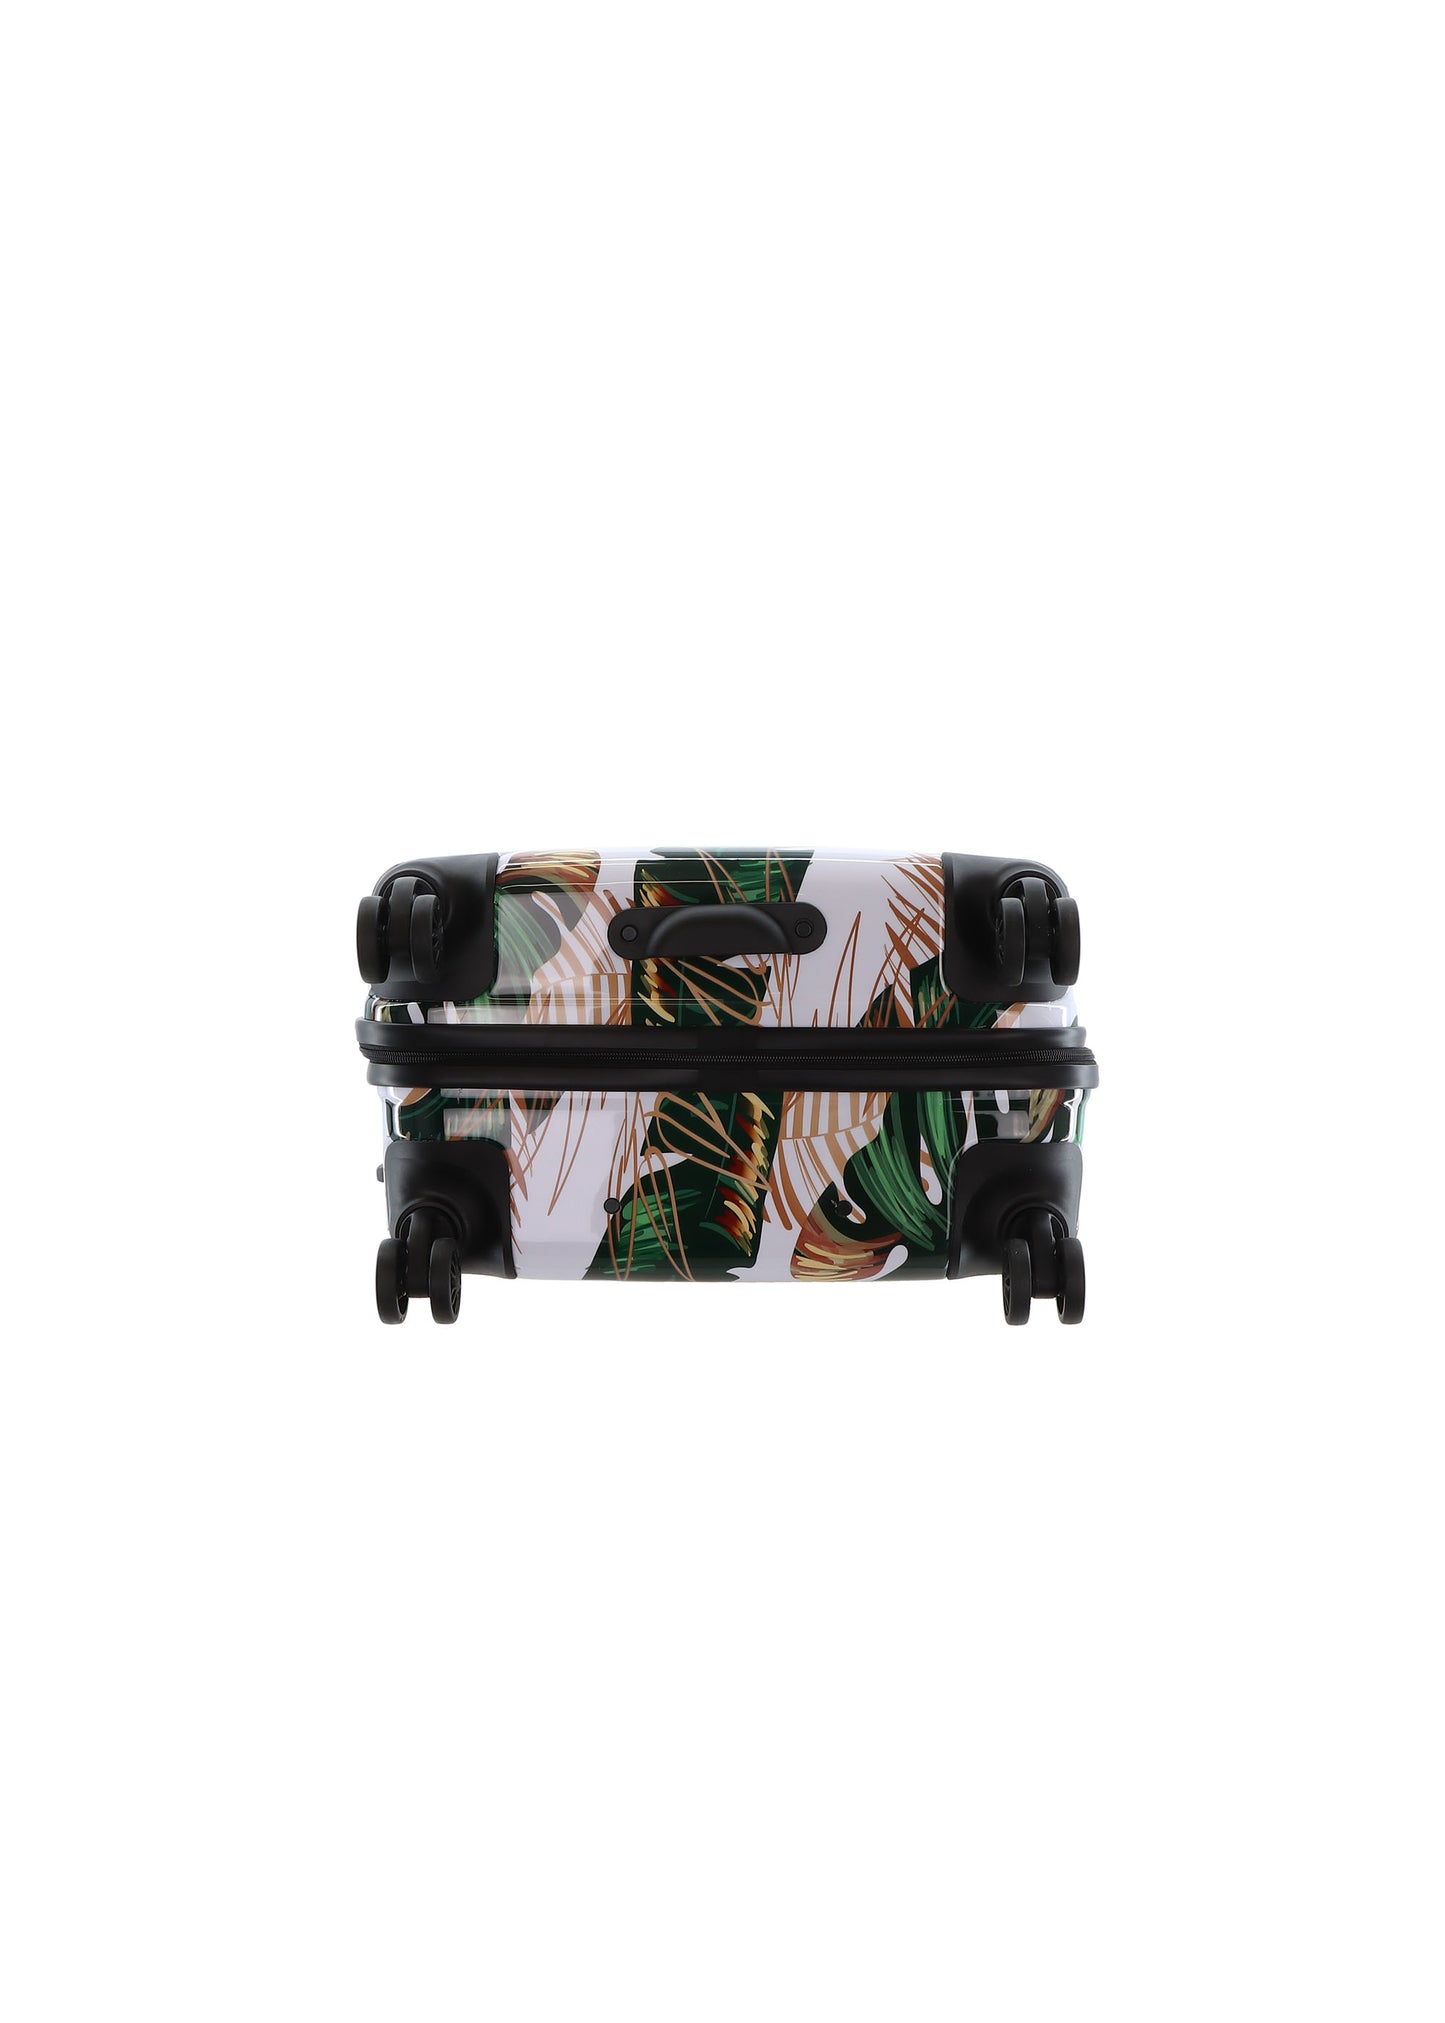 Saxoline Harde Koffer / Trolley / Reiskoffer - 64 cm (Medium) - Virgin Forest Print